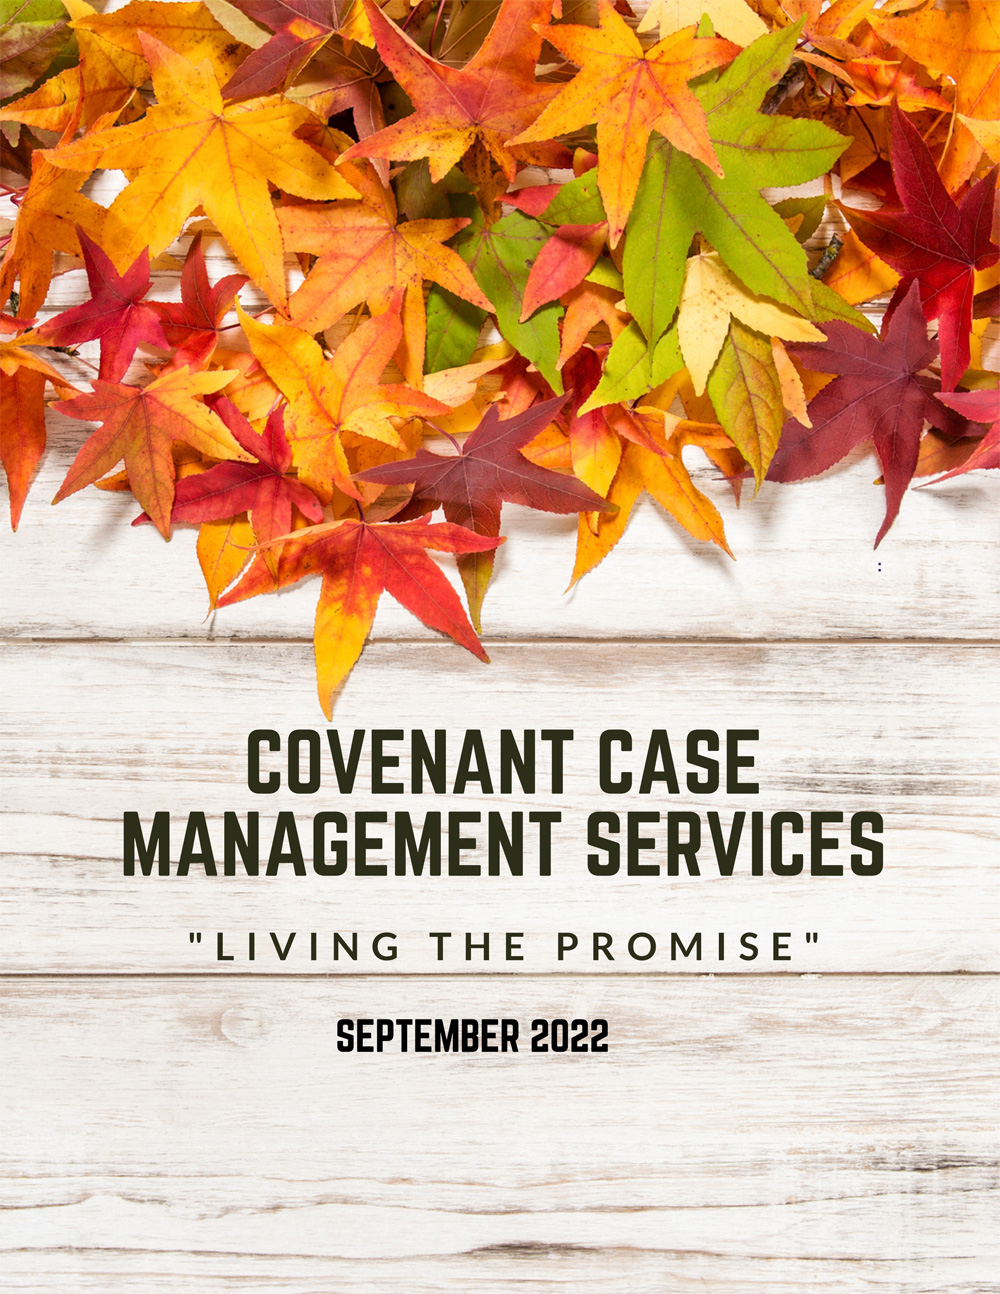 September 2022 Newsletter from Covenant Case Management Services